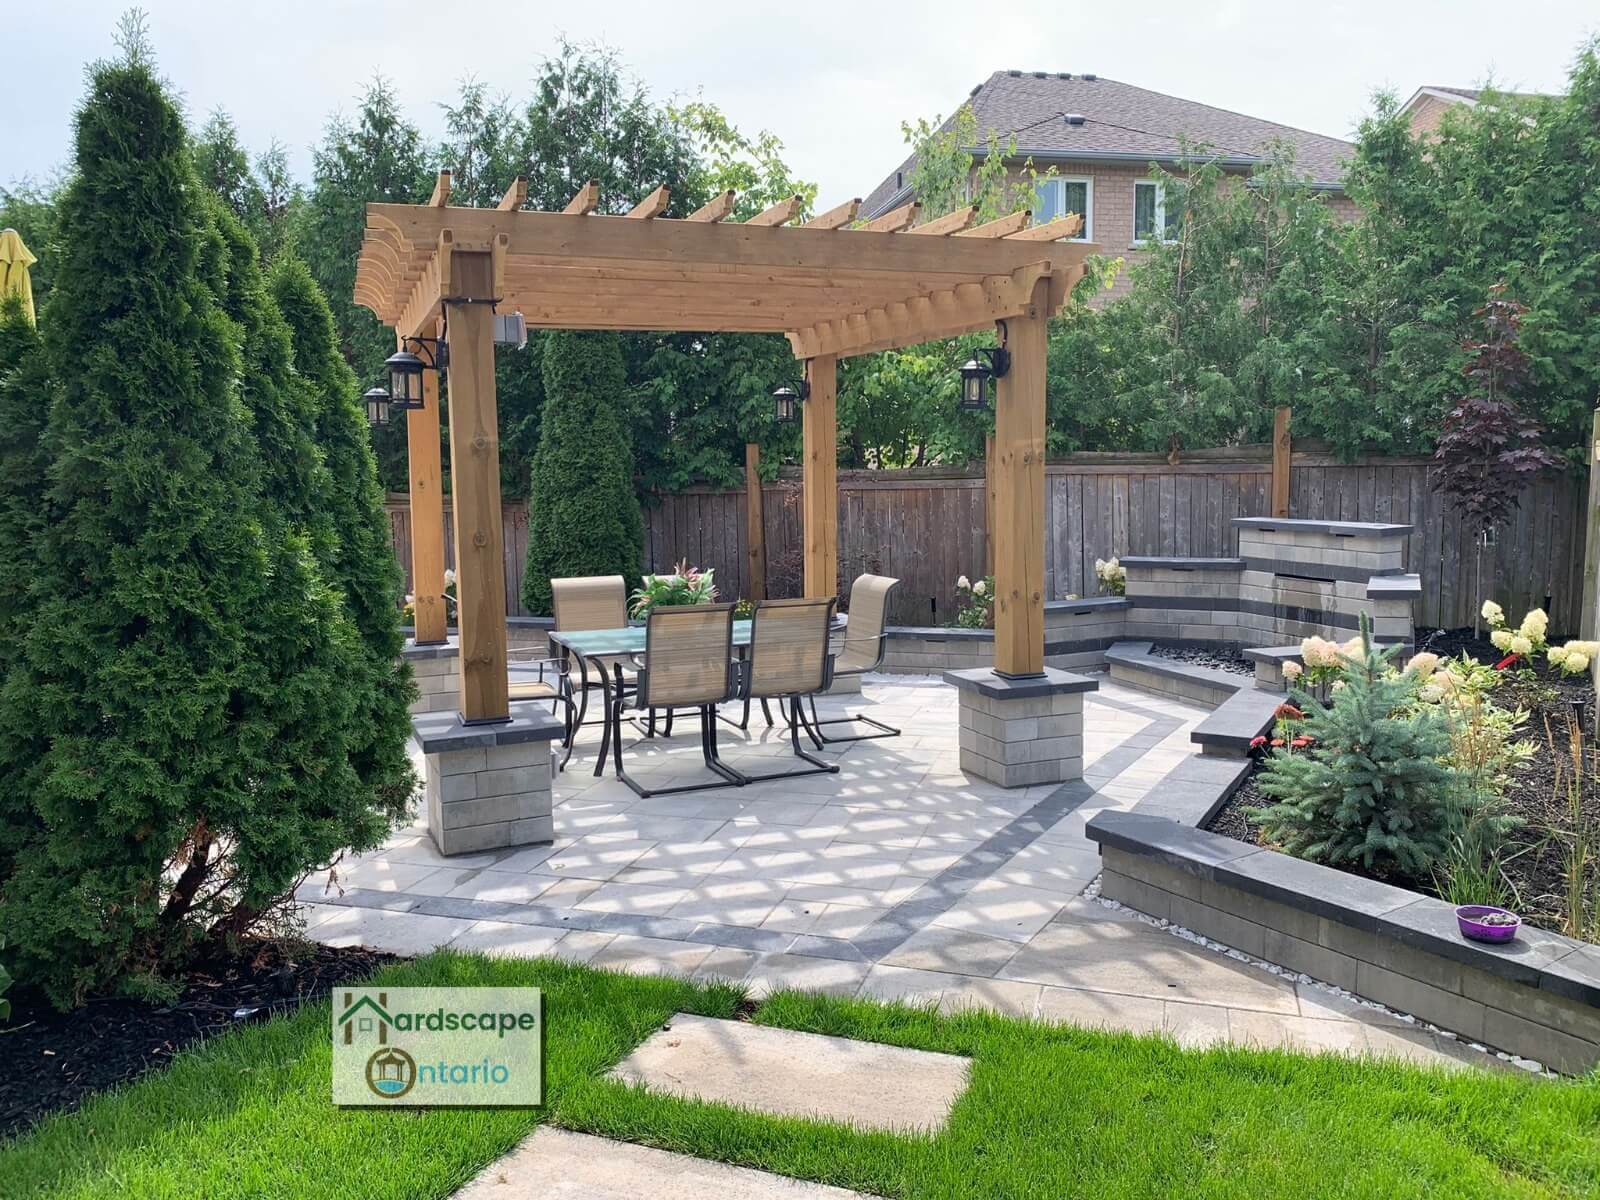 Beautifully designed backyard interlocked patio with a gazebo